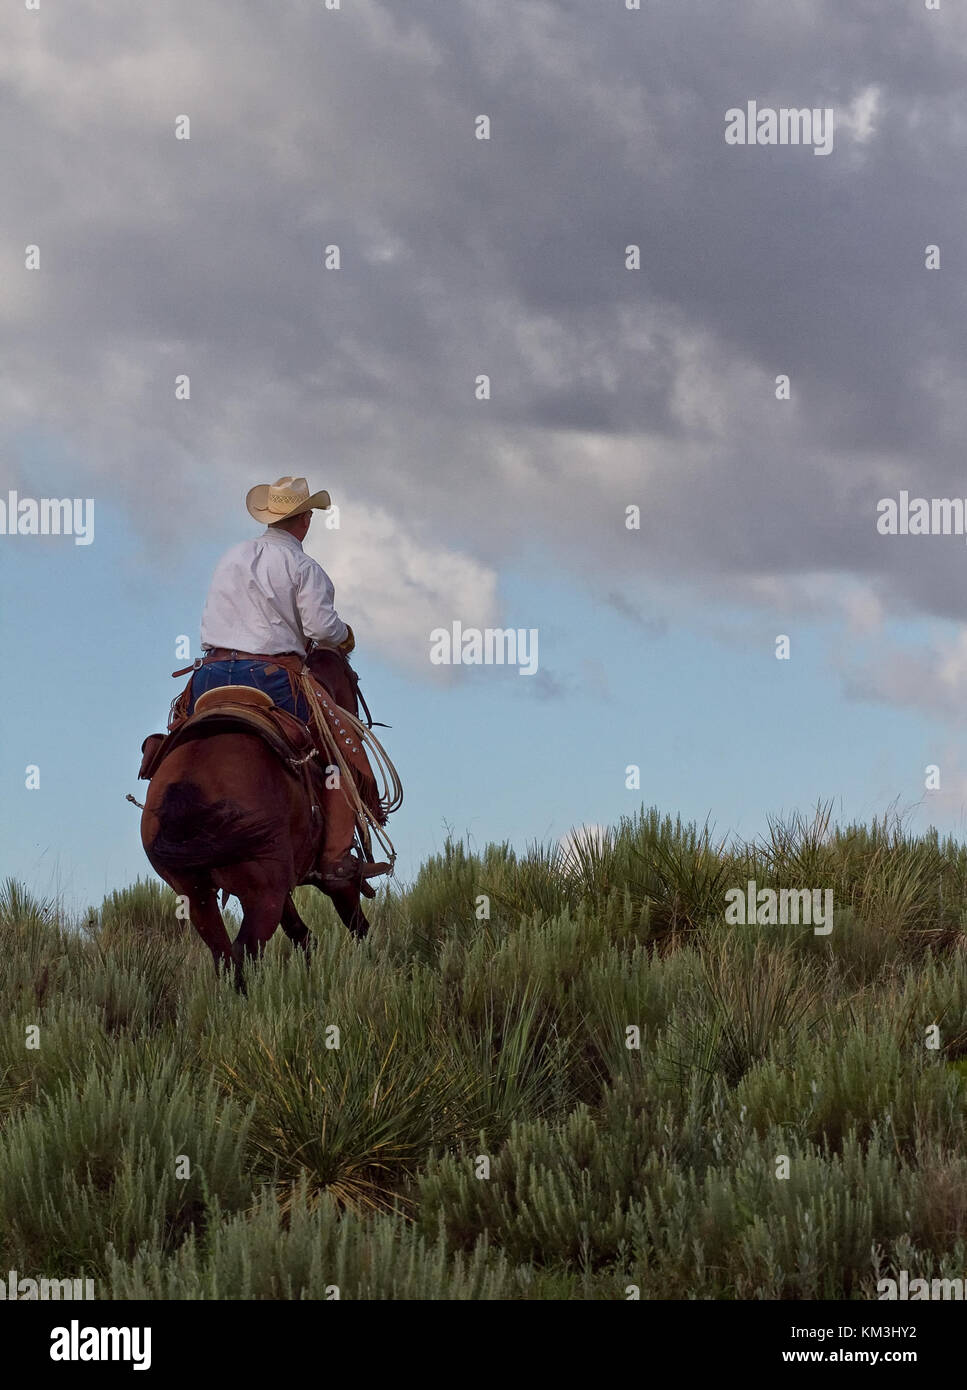 Un vaquero solitario ridesthrough artemisa para roundup ganado Foto de stock